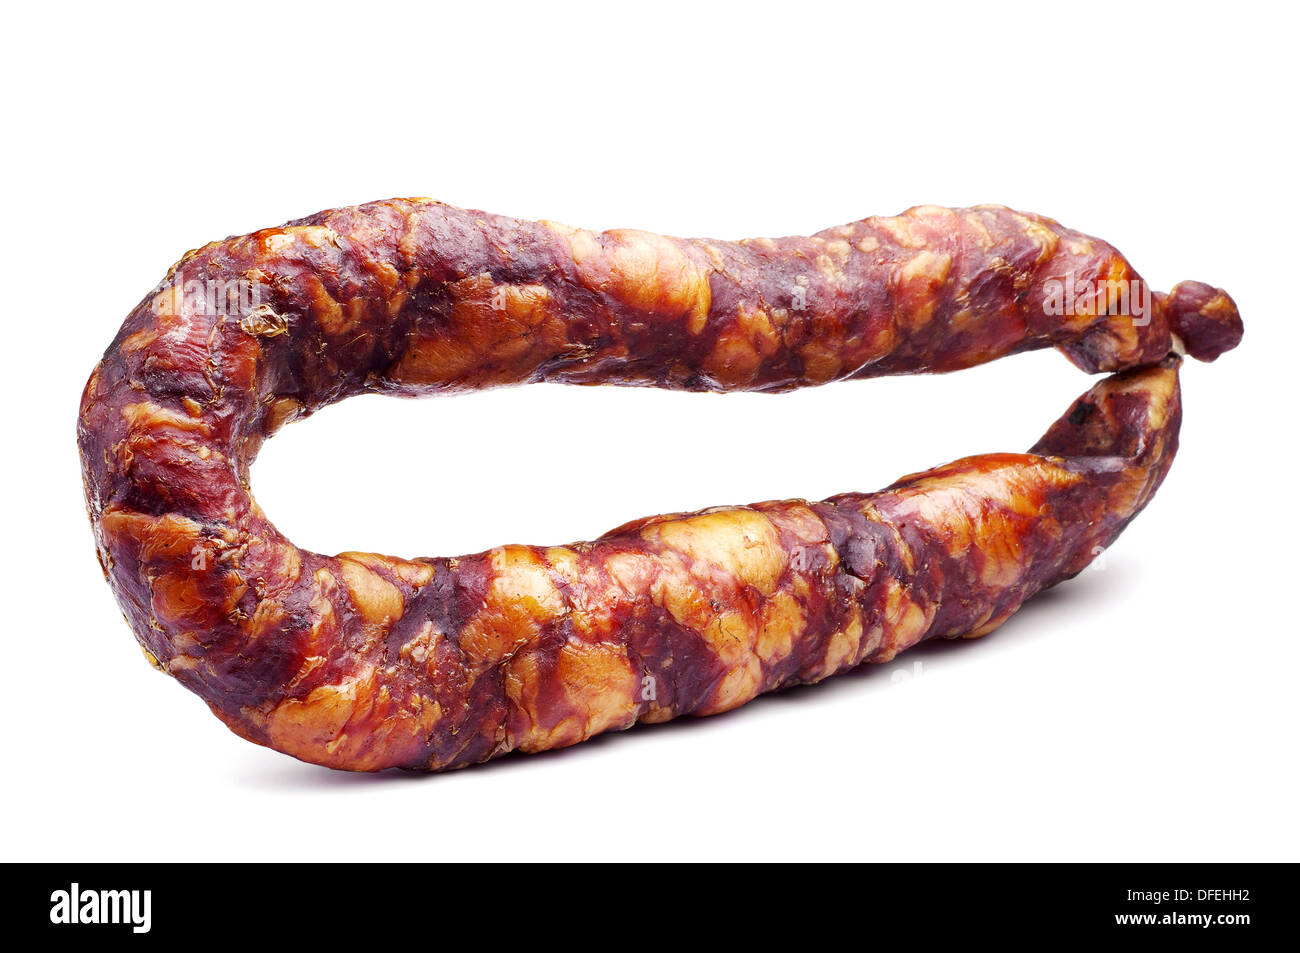 Thin smoked sausage on white Stock Photo